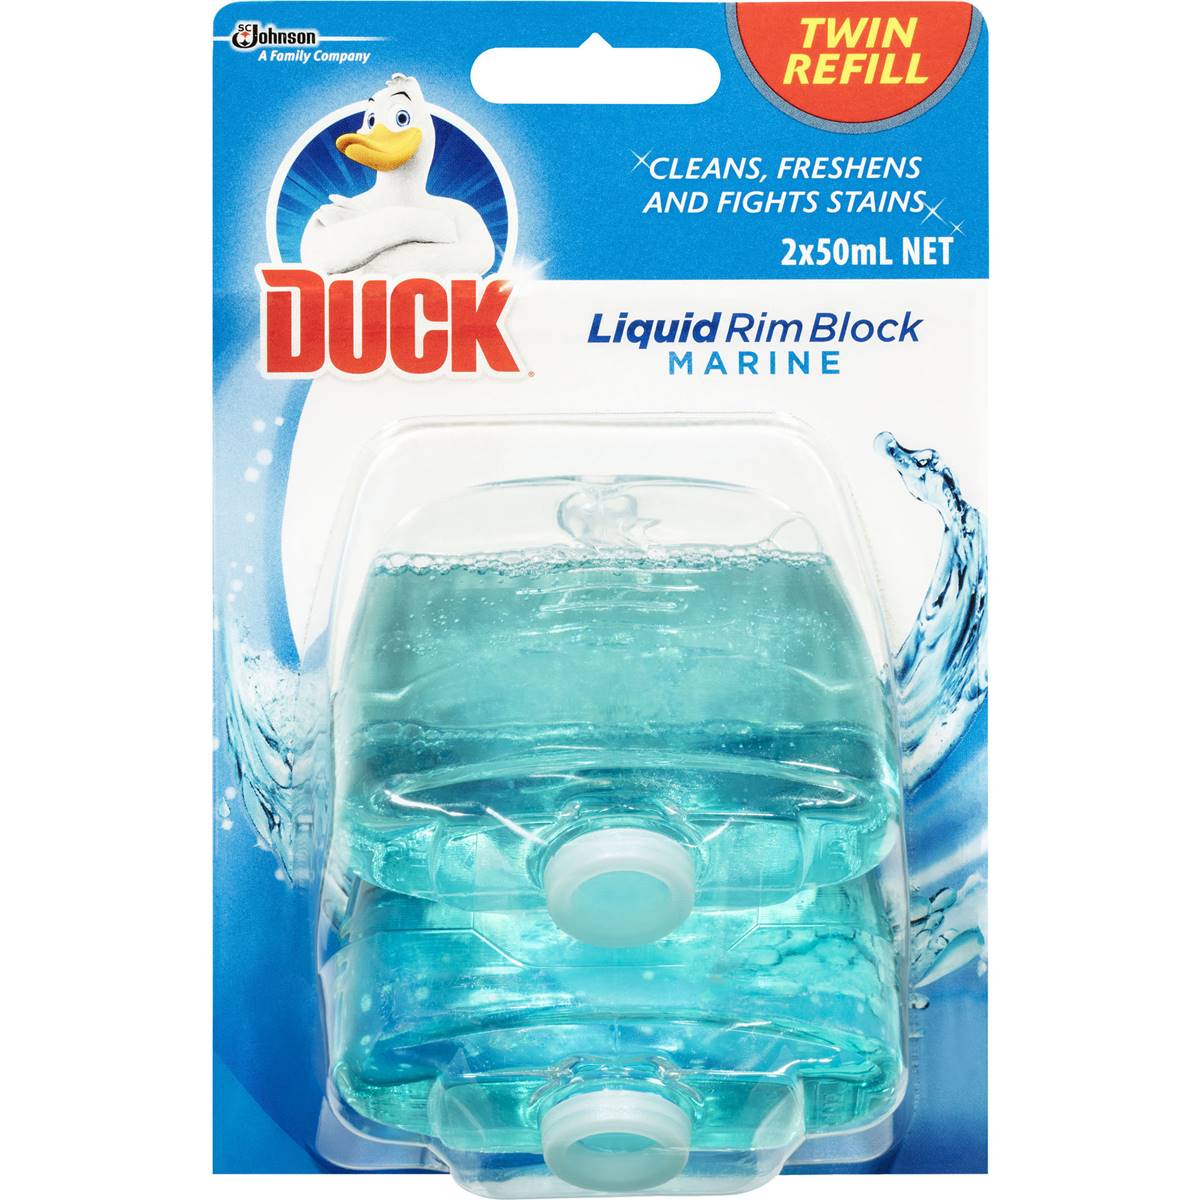 Duck Liquid Rim Block Toilet Cleaner Marine Twin Refill 2x50ml